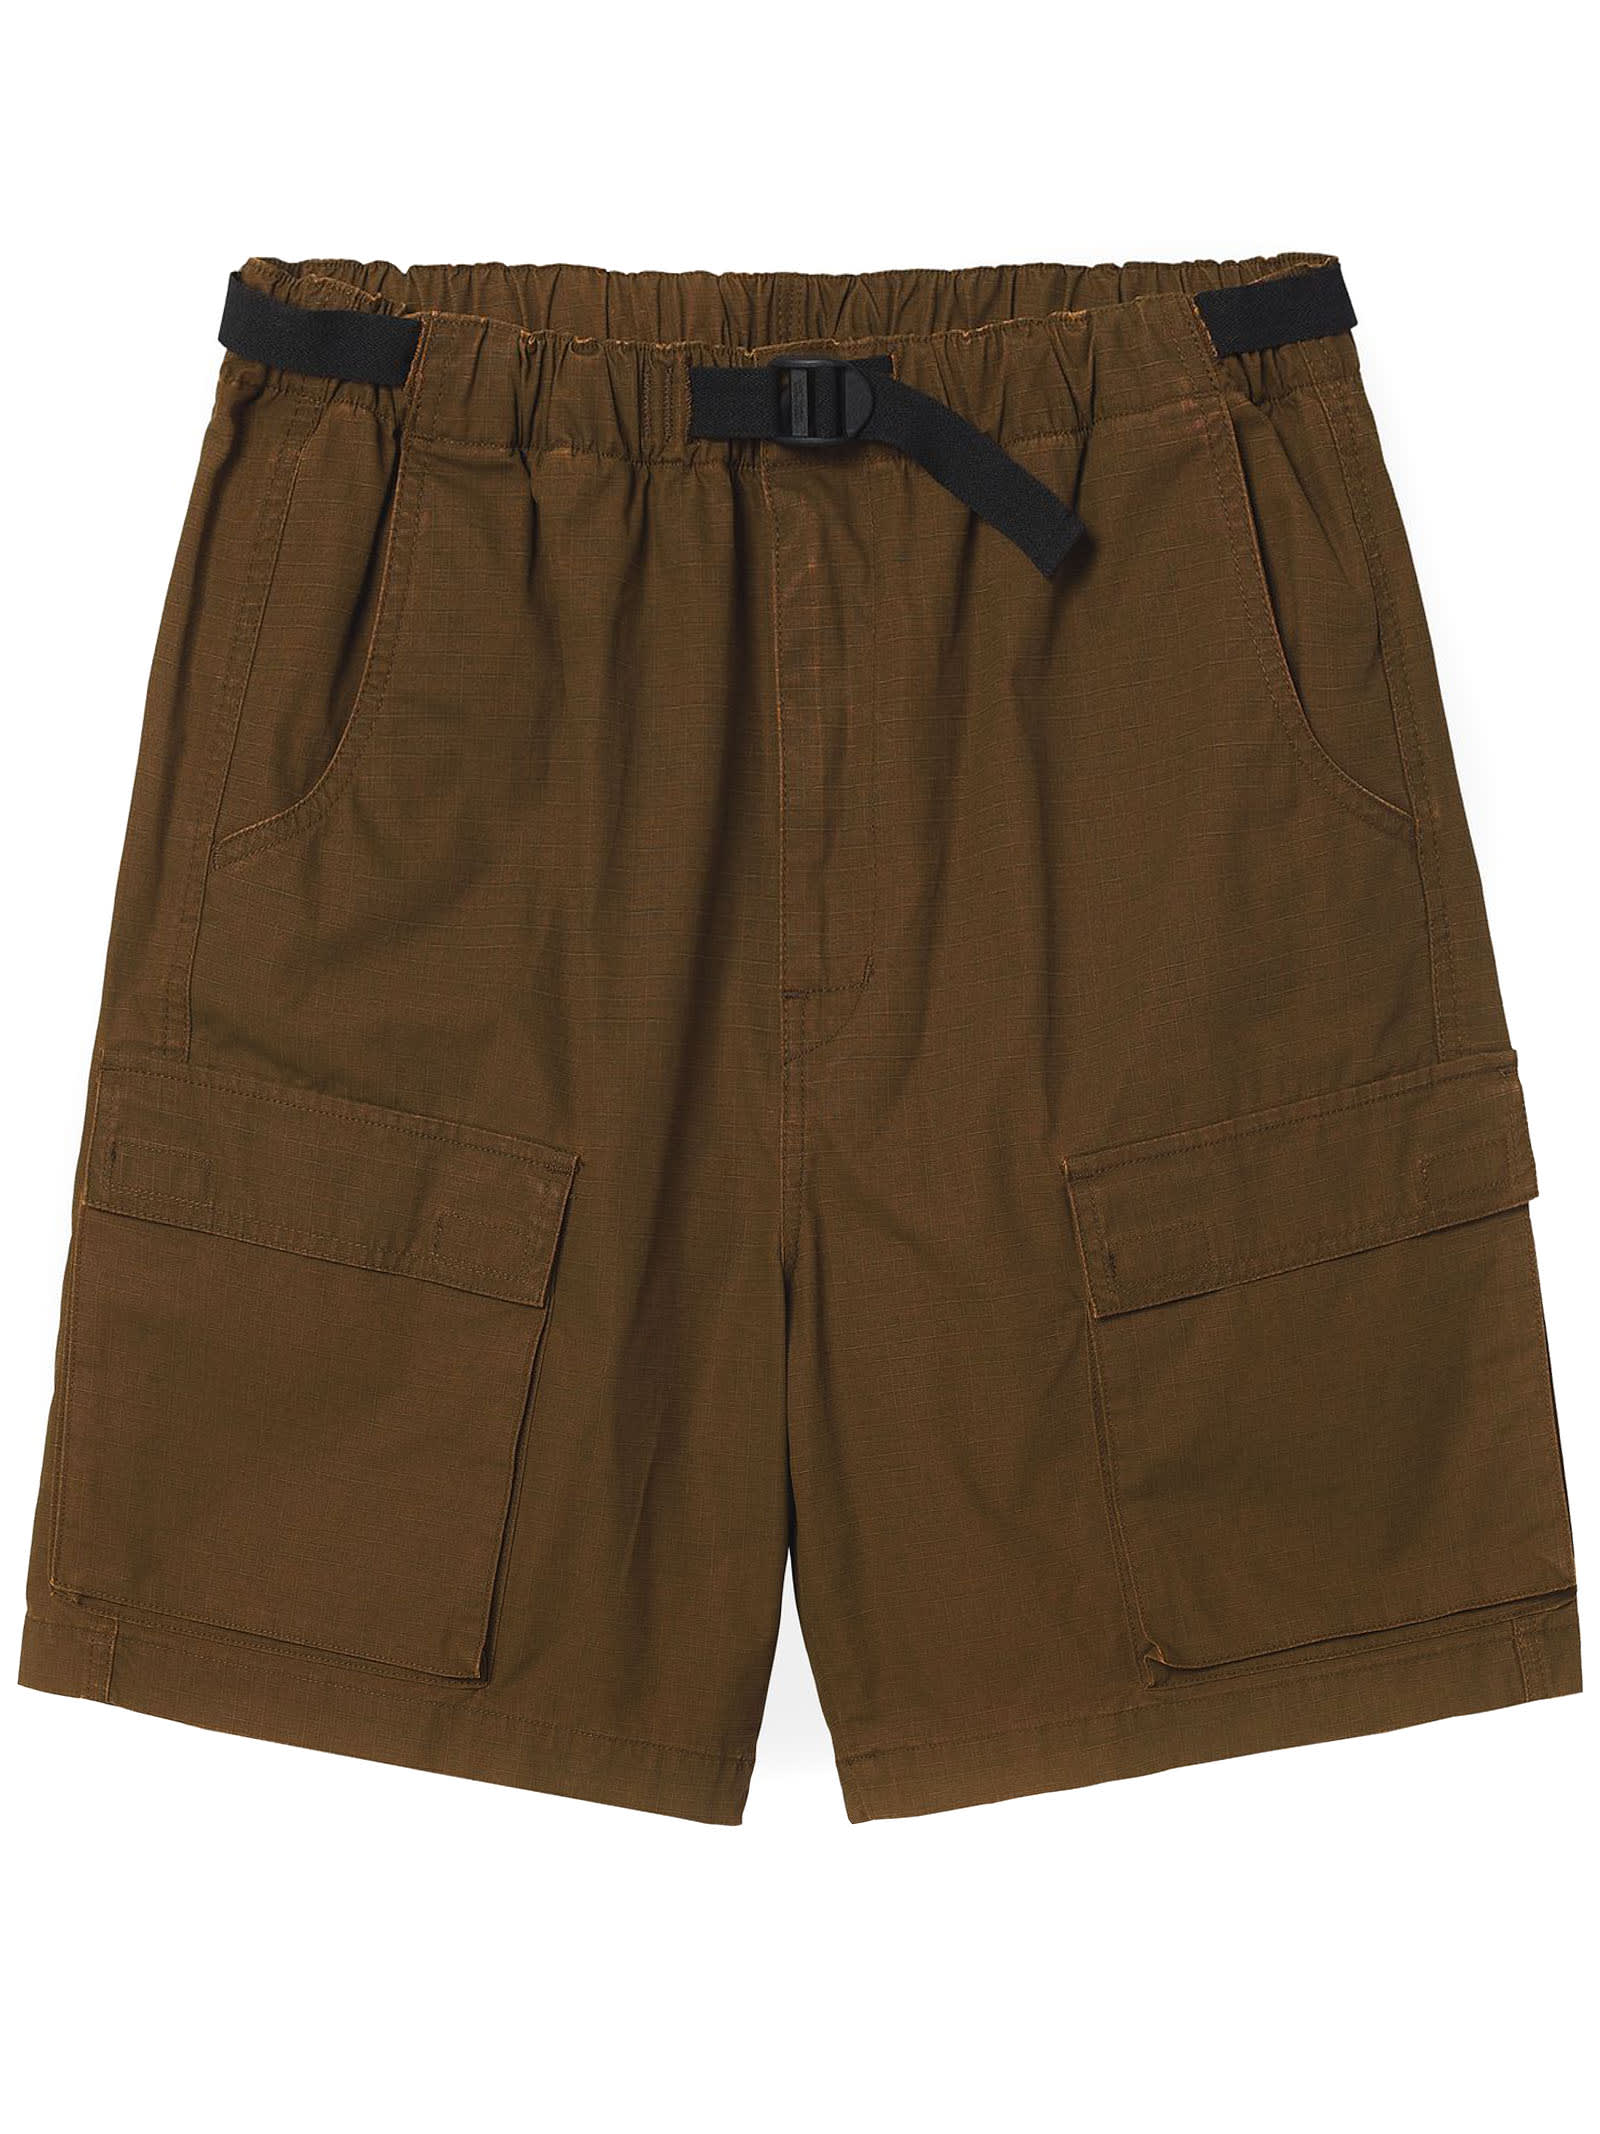 Carhartt Brown Cotton Cargo Shorts